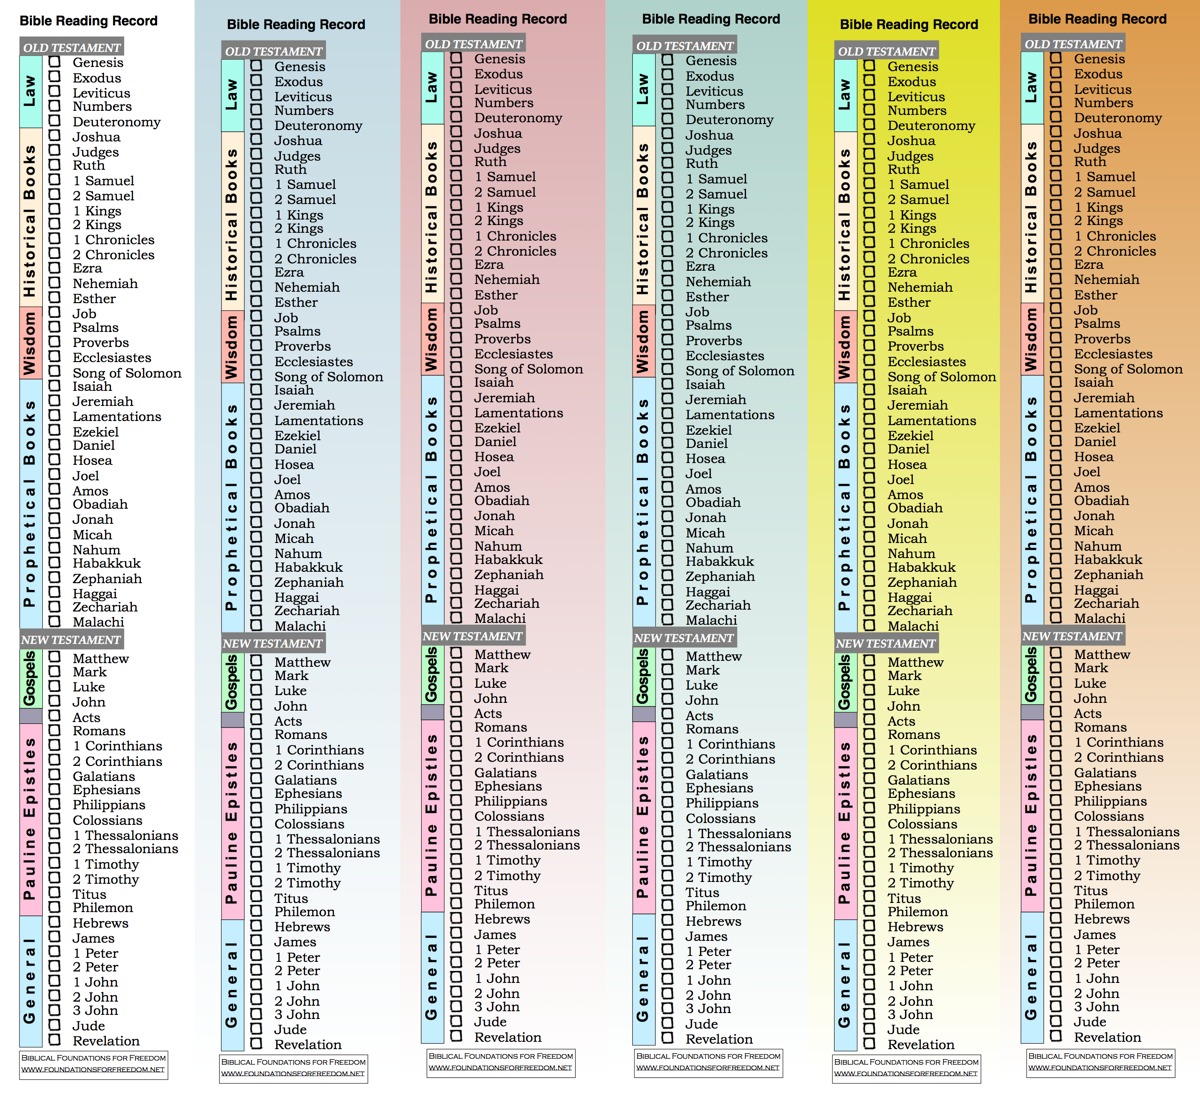 Bible Books Timeline Chart